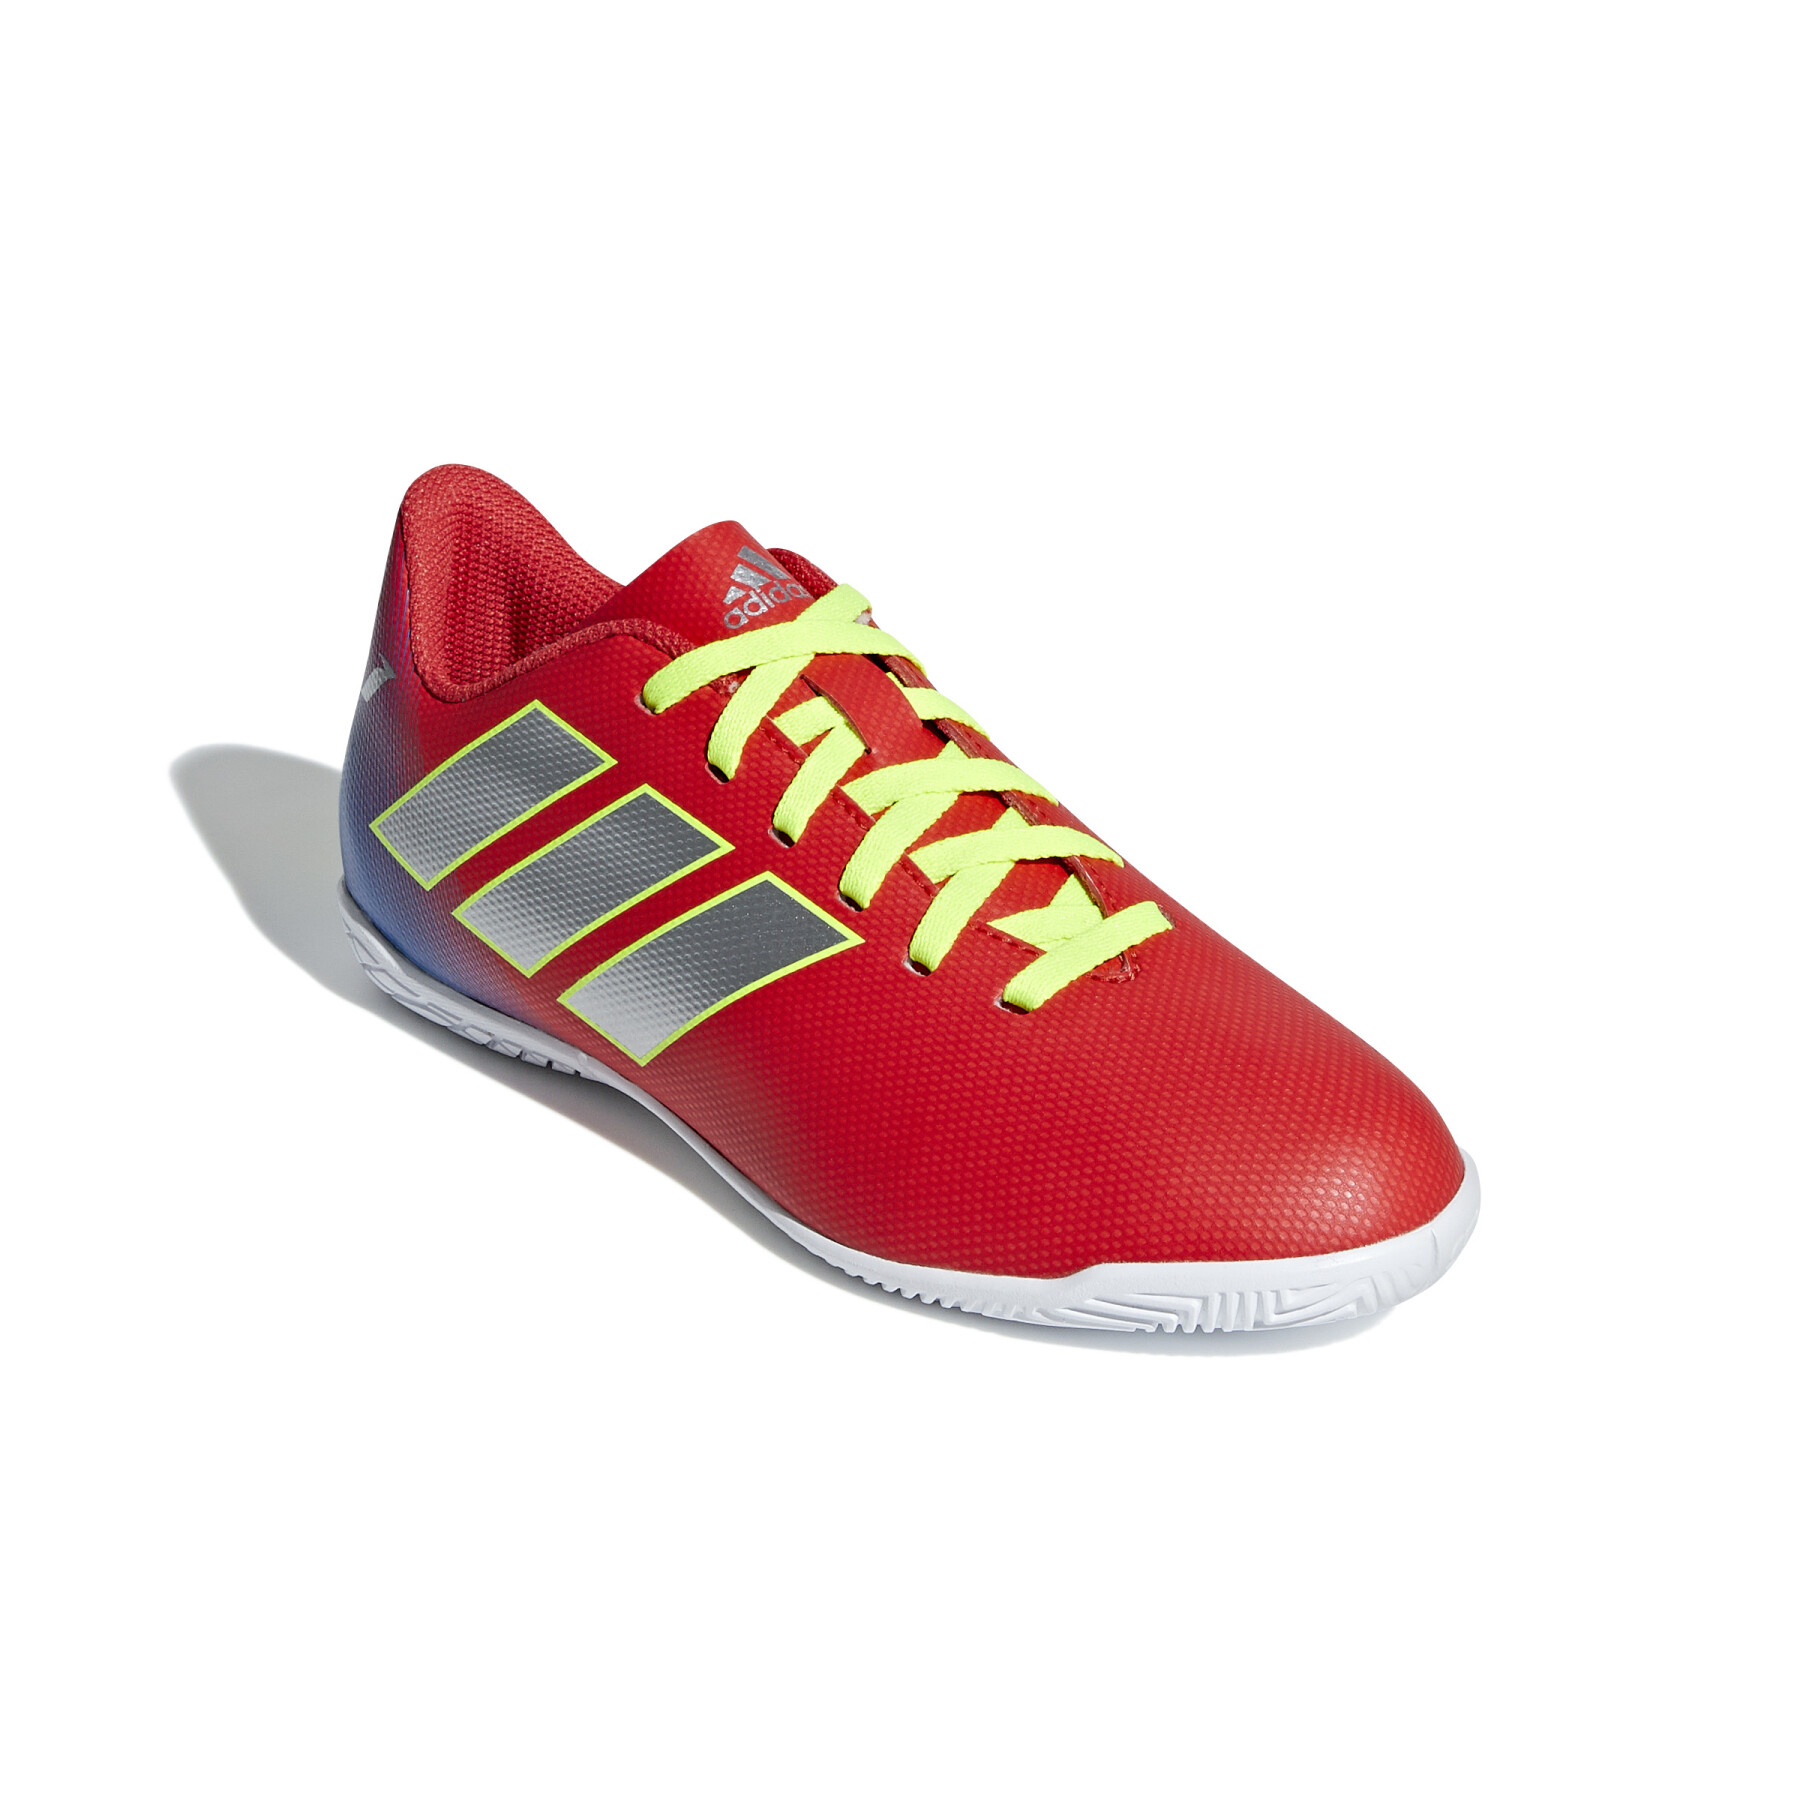 Chaussures de football enfant adidas Nemeziz Messi Tango 18.4 IN